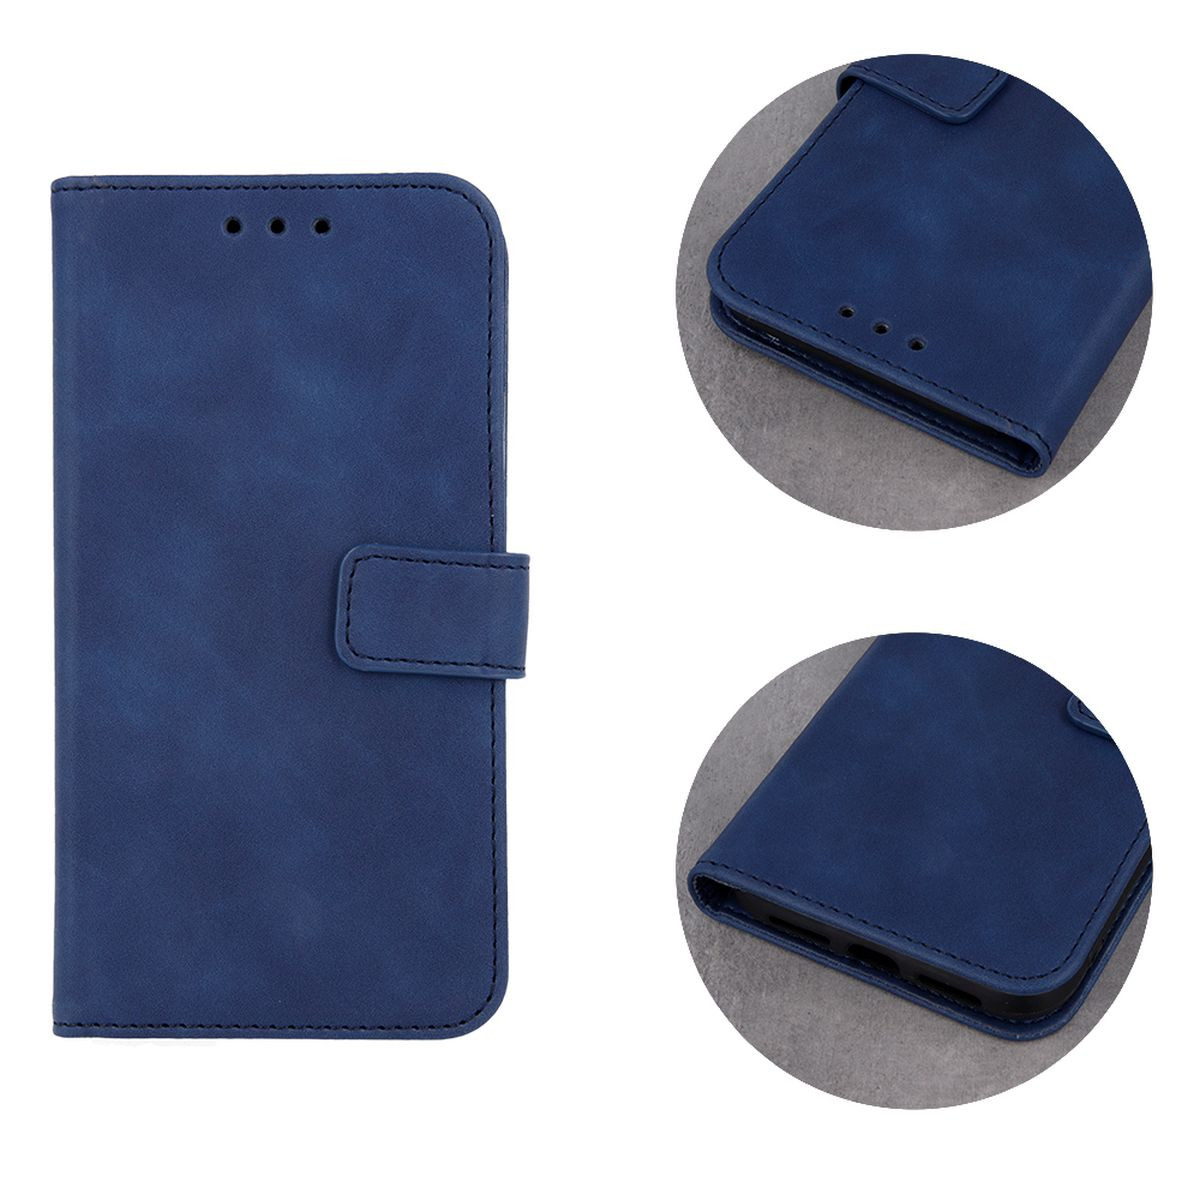 Blau 4G, COFI Galaxy A22 Smart Samsung, Bookcover, Velvet,